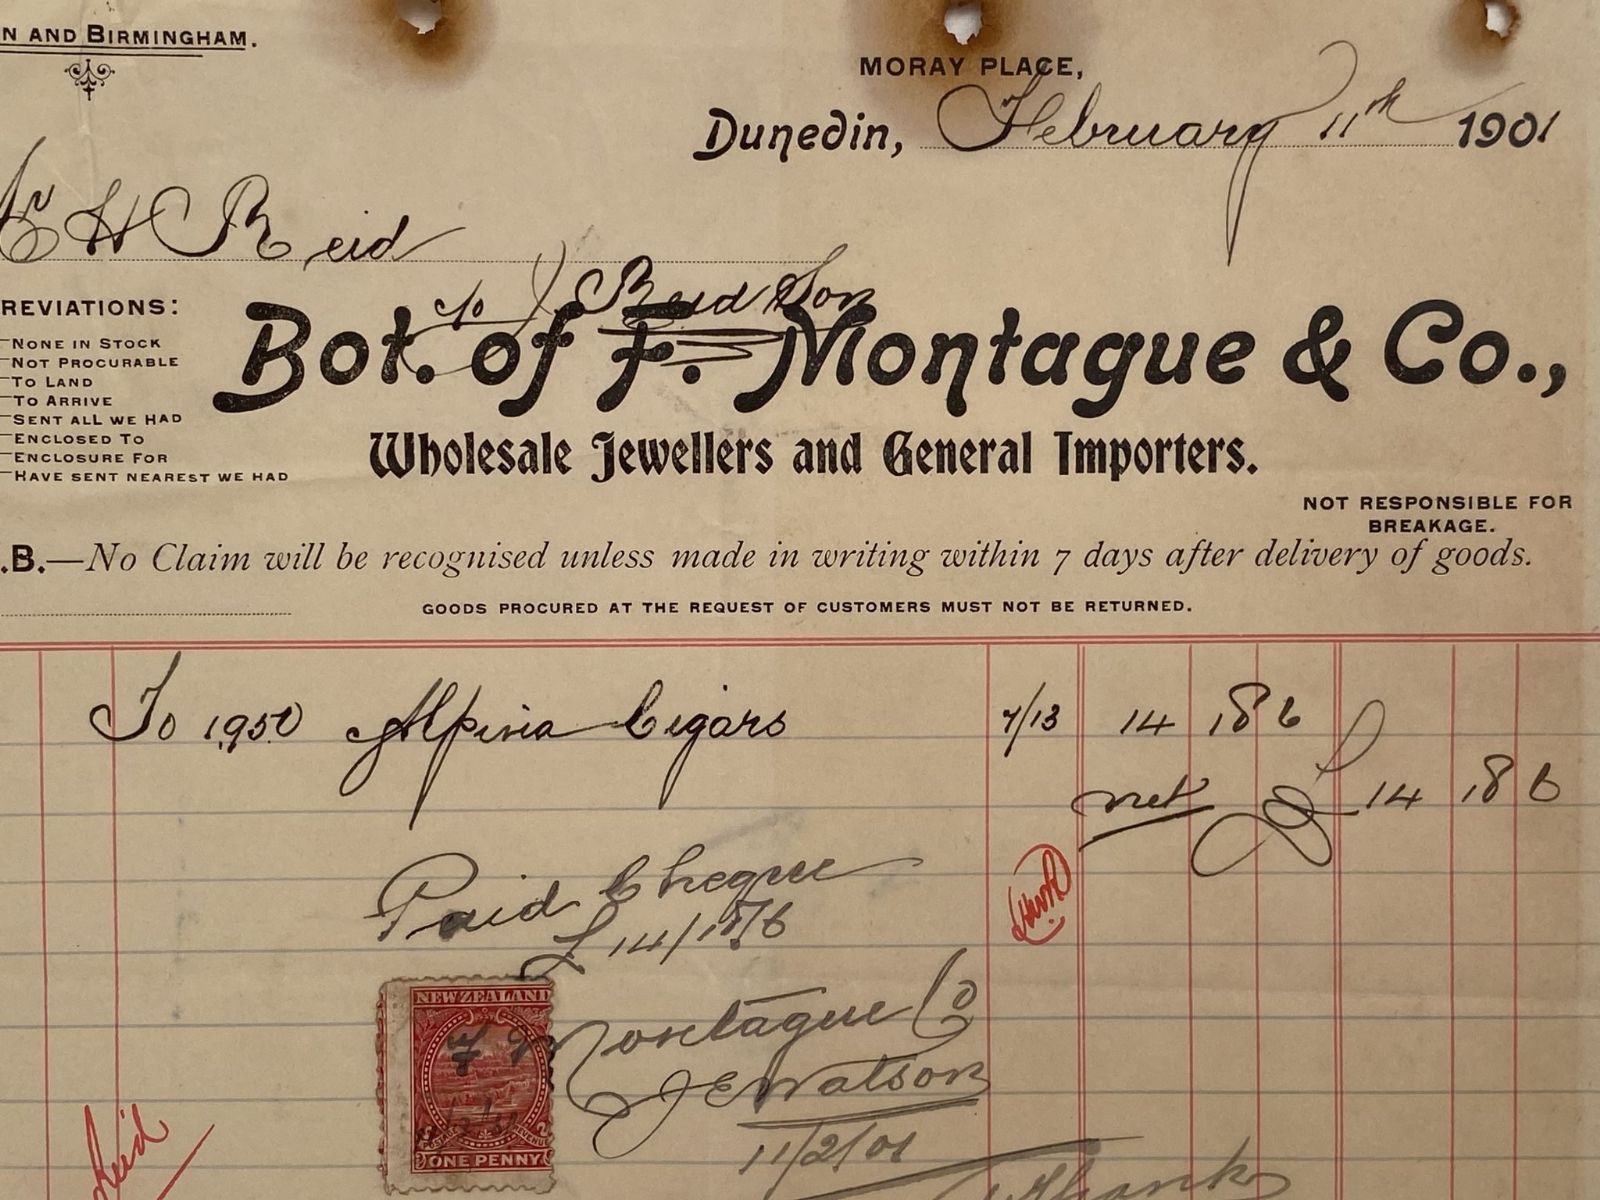 ANTIQUE INVOICE / RECEIPT: F. Montague & Co. Dunedin – Jewellers & Importers 1901